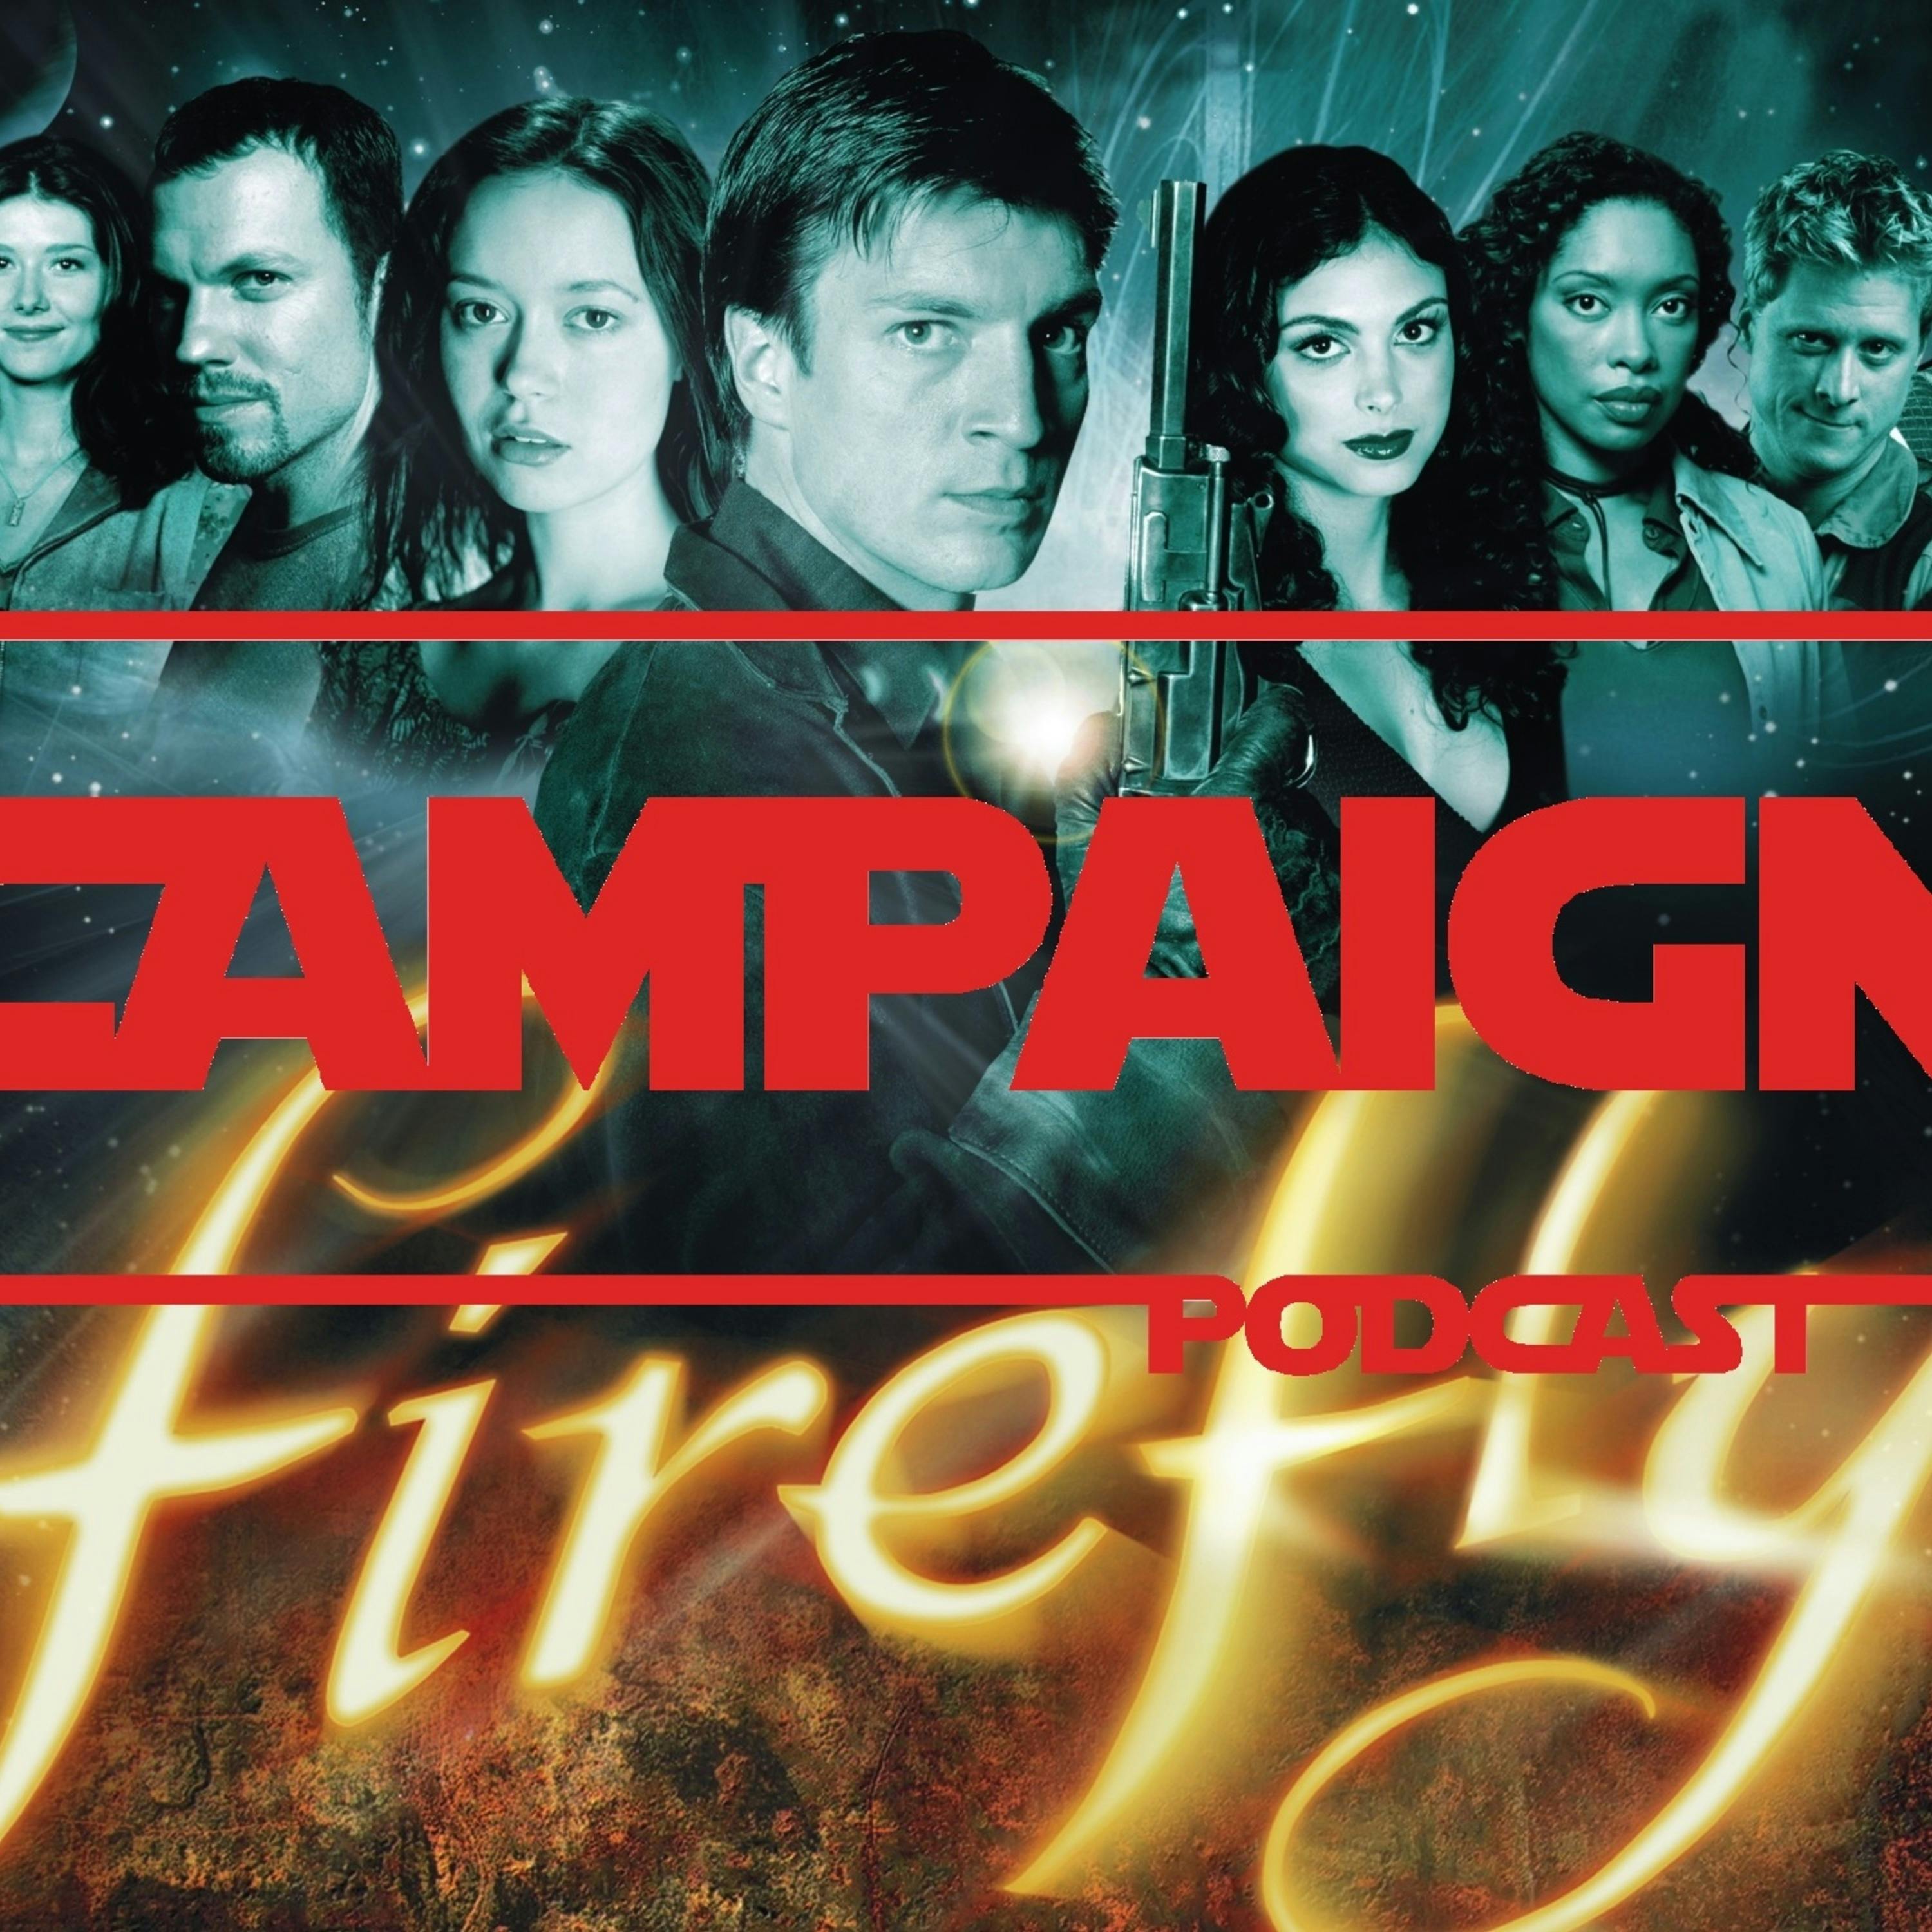 Firefly: Episode 1